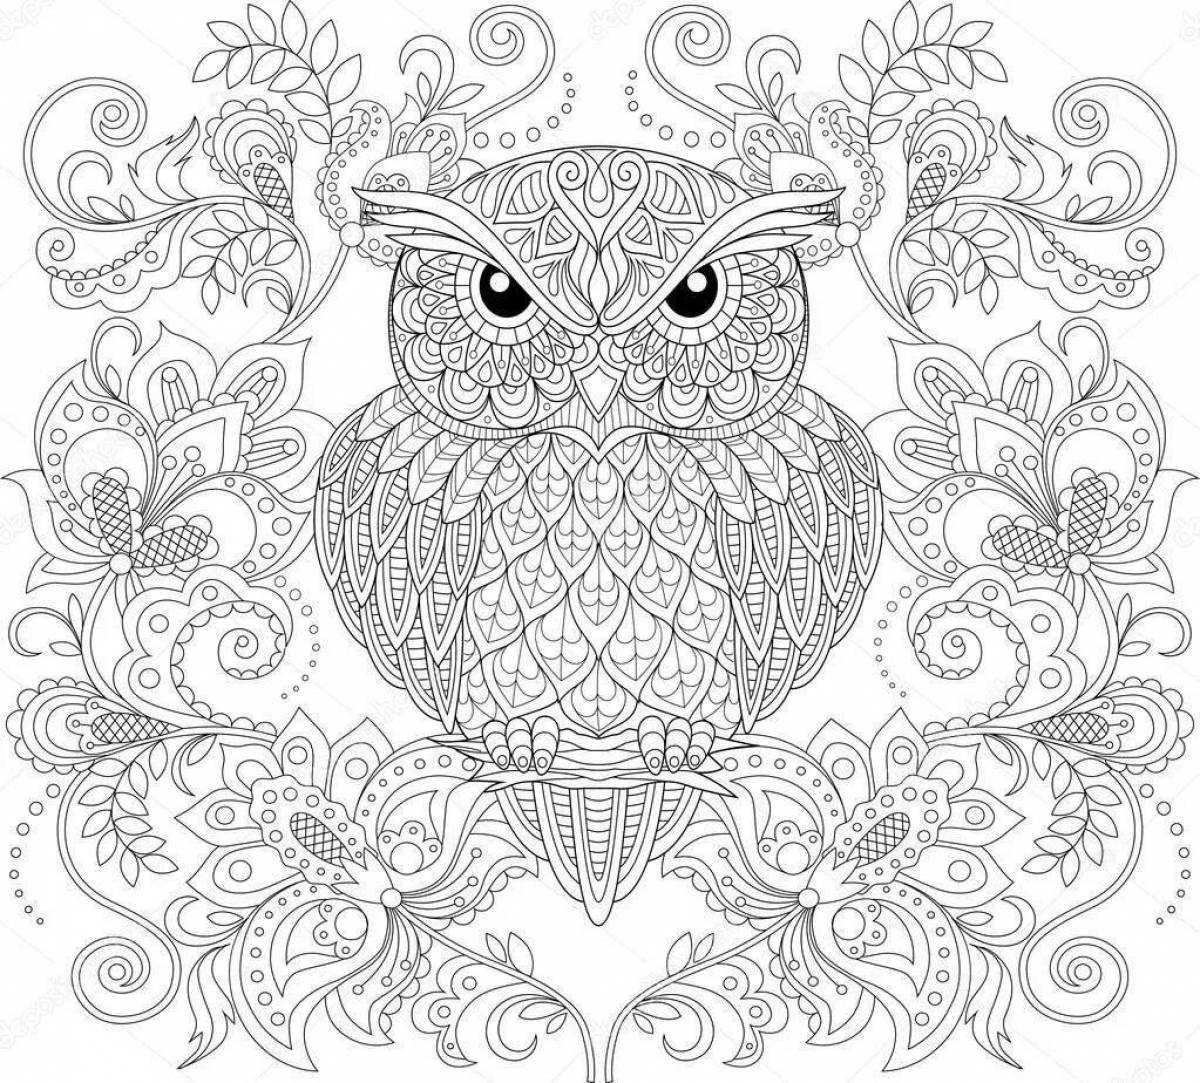 Fun coloring complex owl